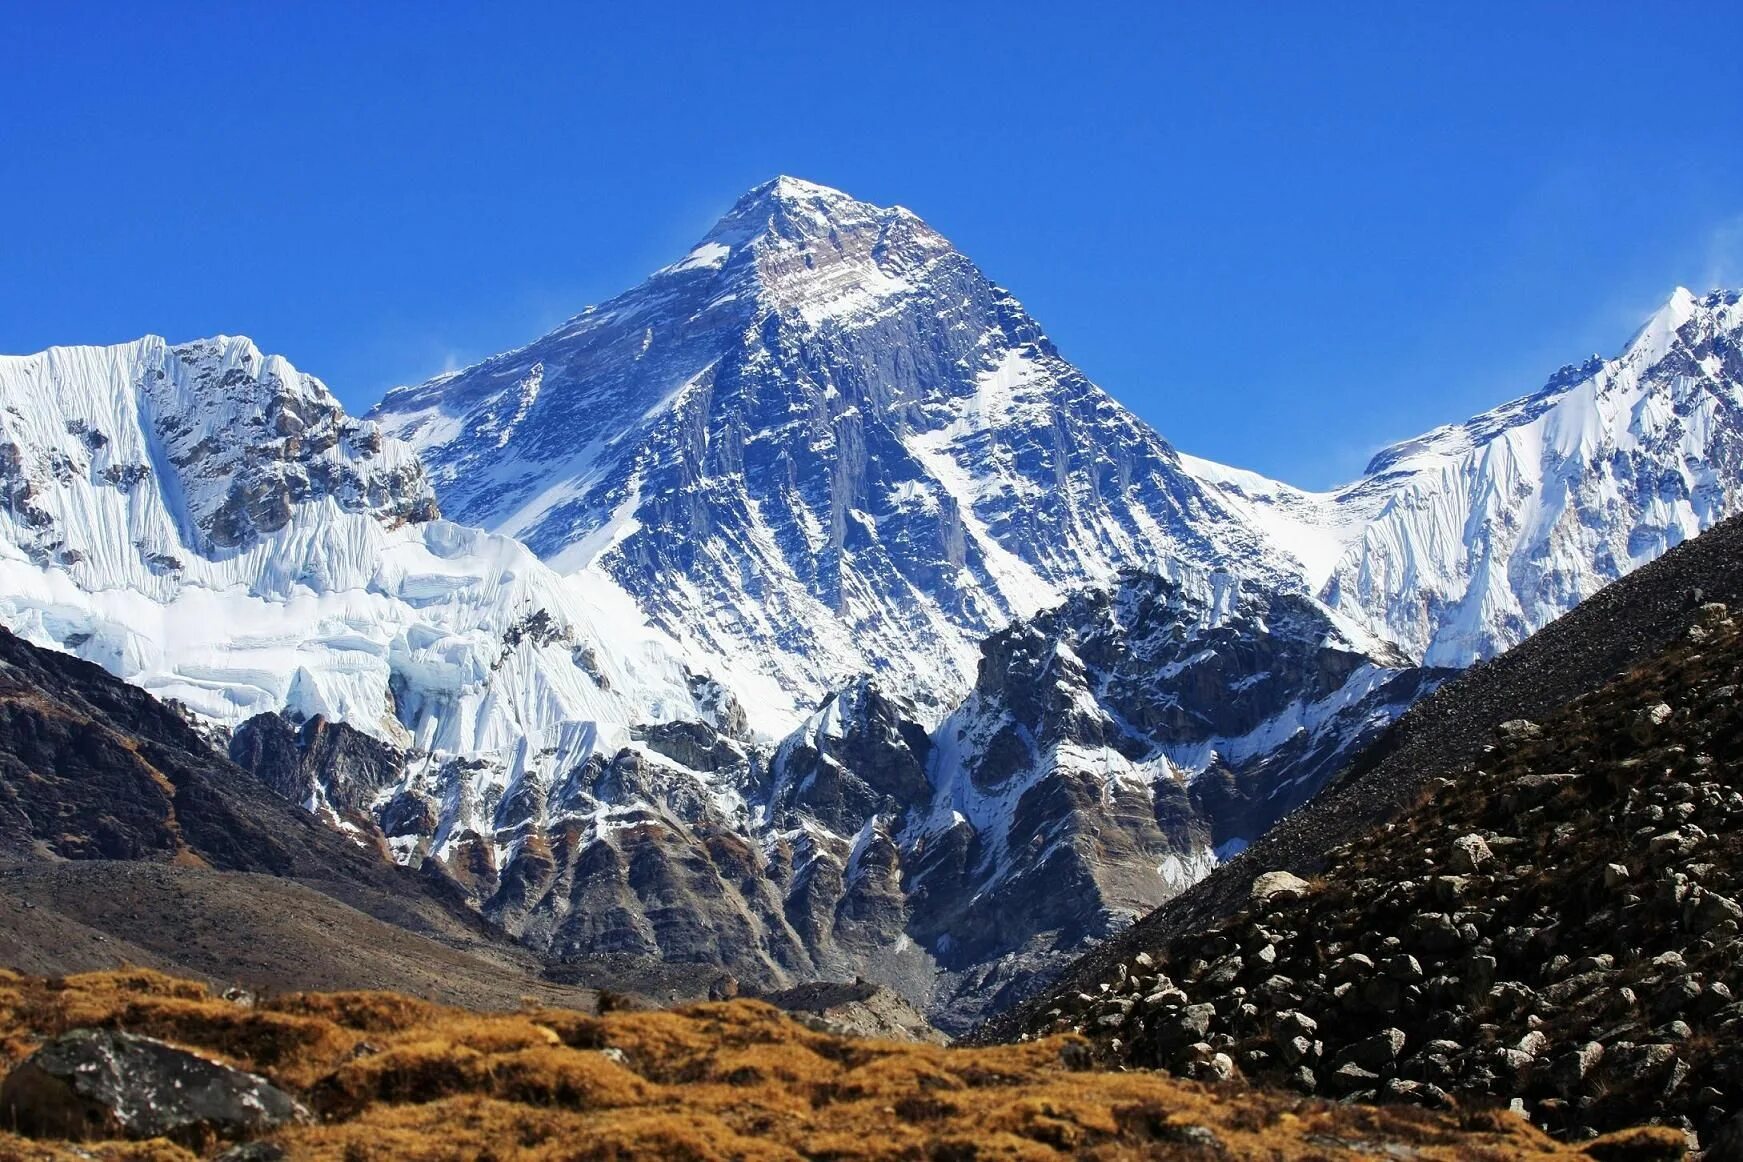 Mount everest is high in the world. Гималаи Эверест Джомолунгма. Гора Эверест (Джомолунгма). Гималаи. Непал Гималаи Эверест. Непал Горная вершина Джомолунгма (Эверест).